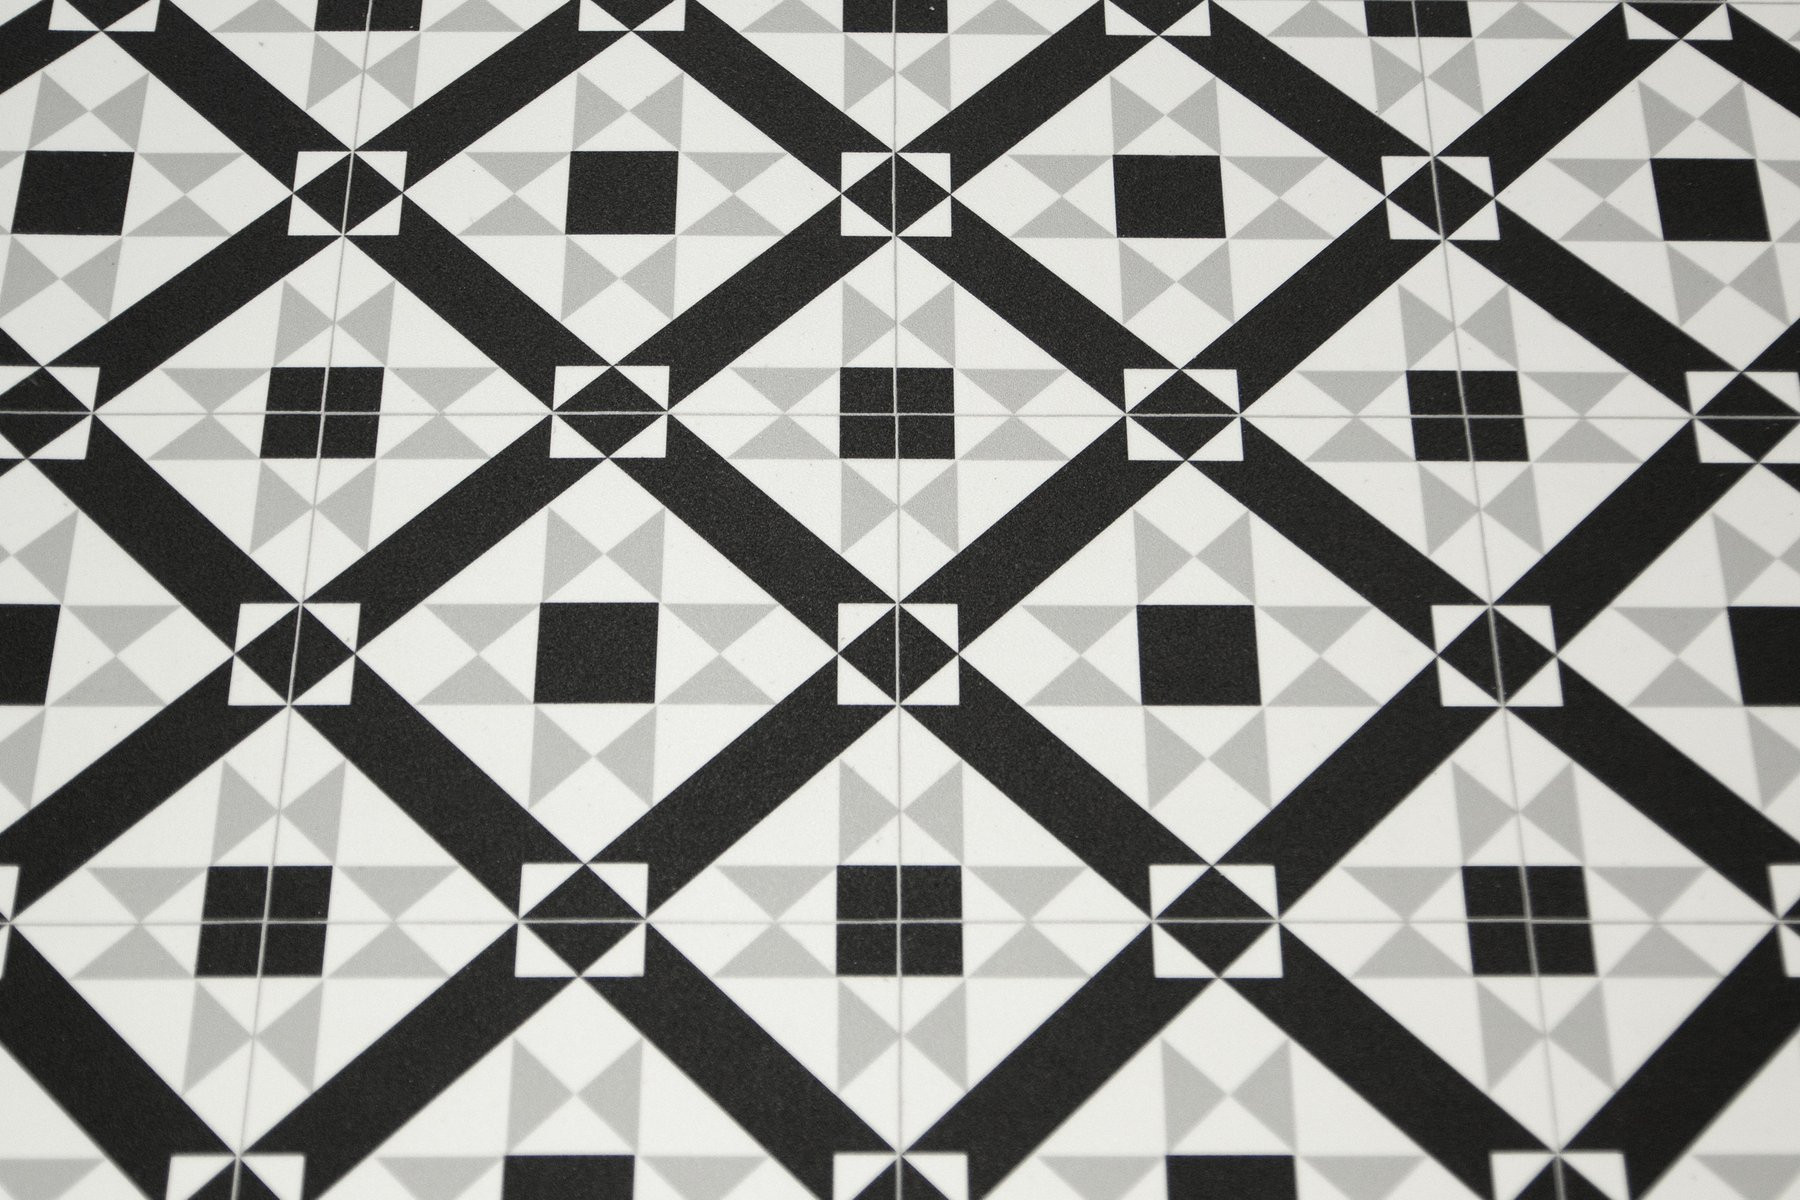 PVC podlaha Zebra Aveiro 599 Mozaika